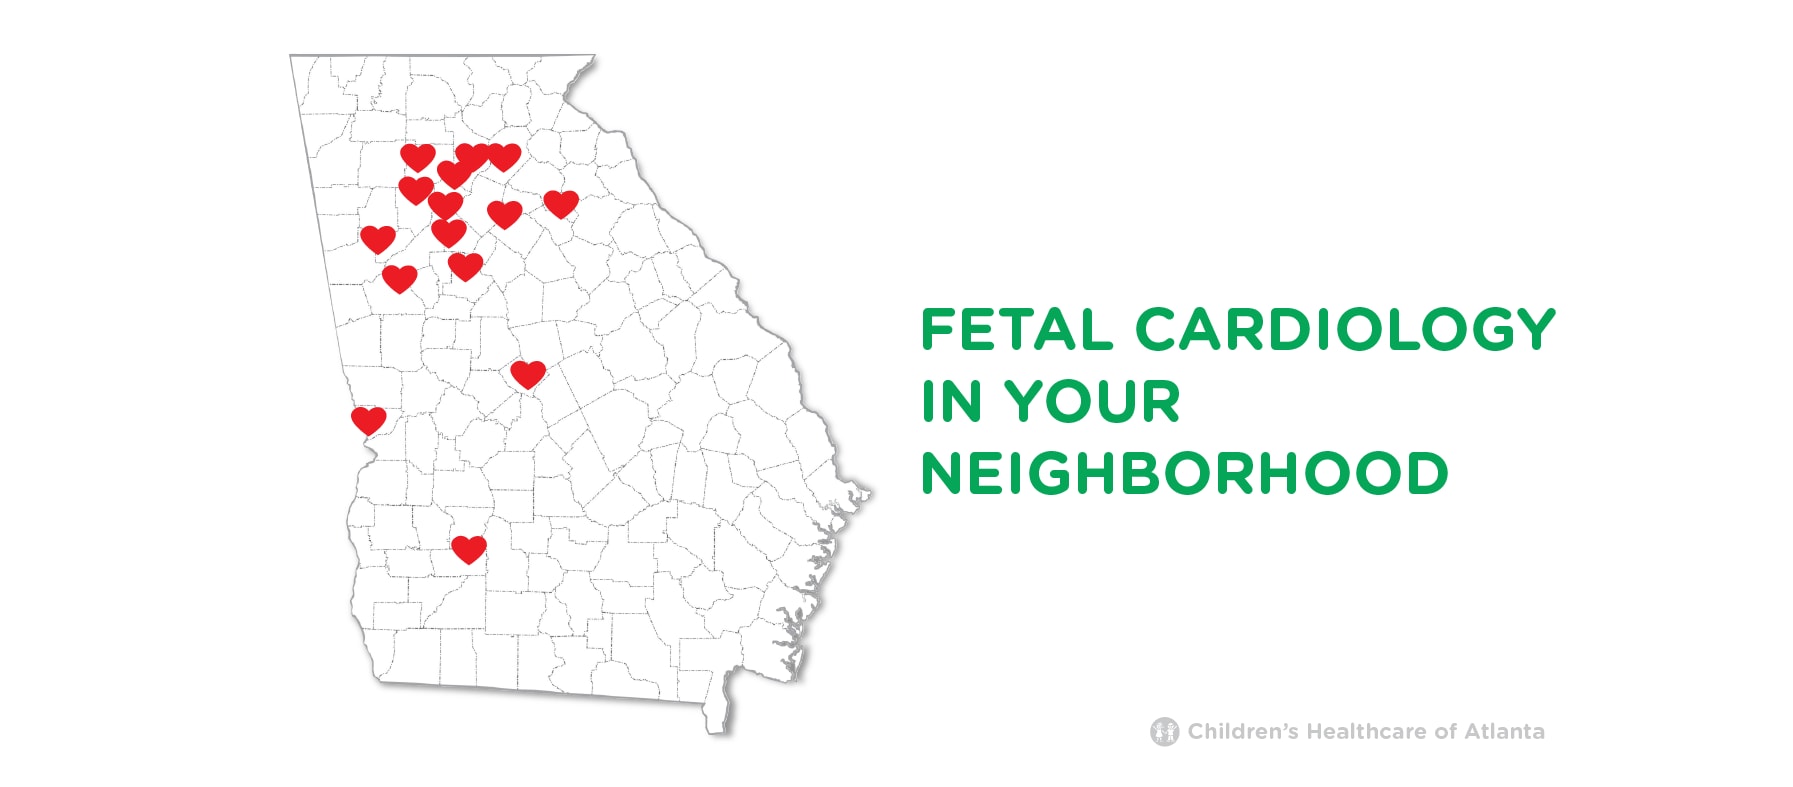 Fetal cardiology in your neighborhood